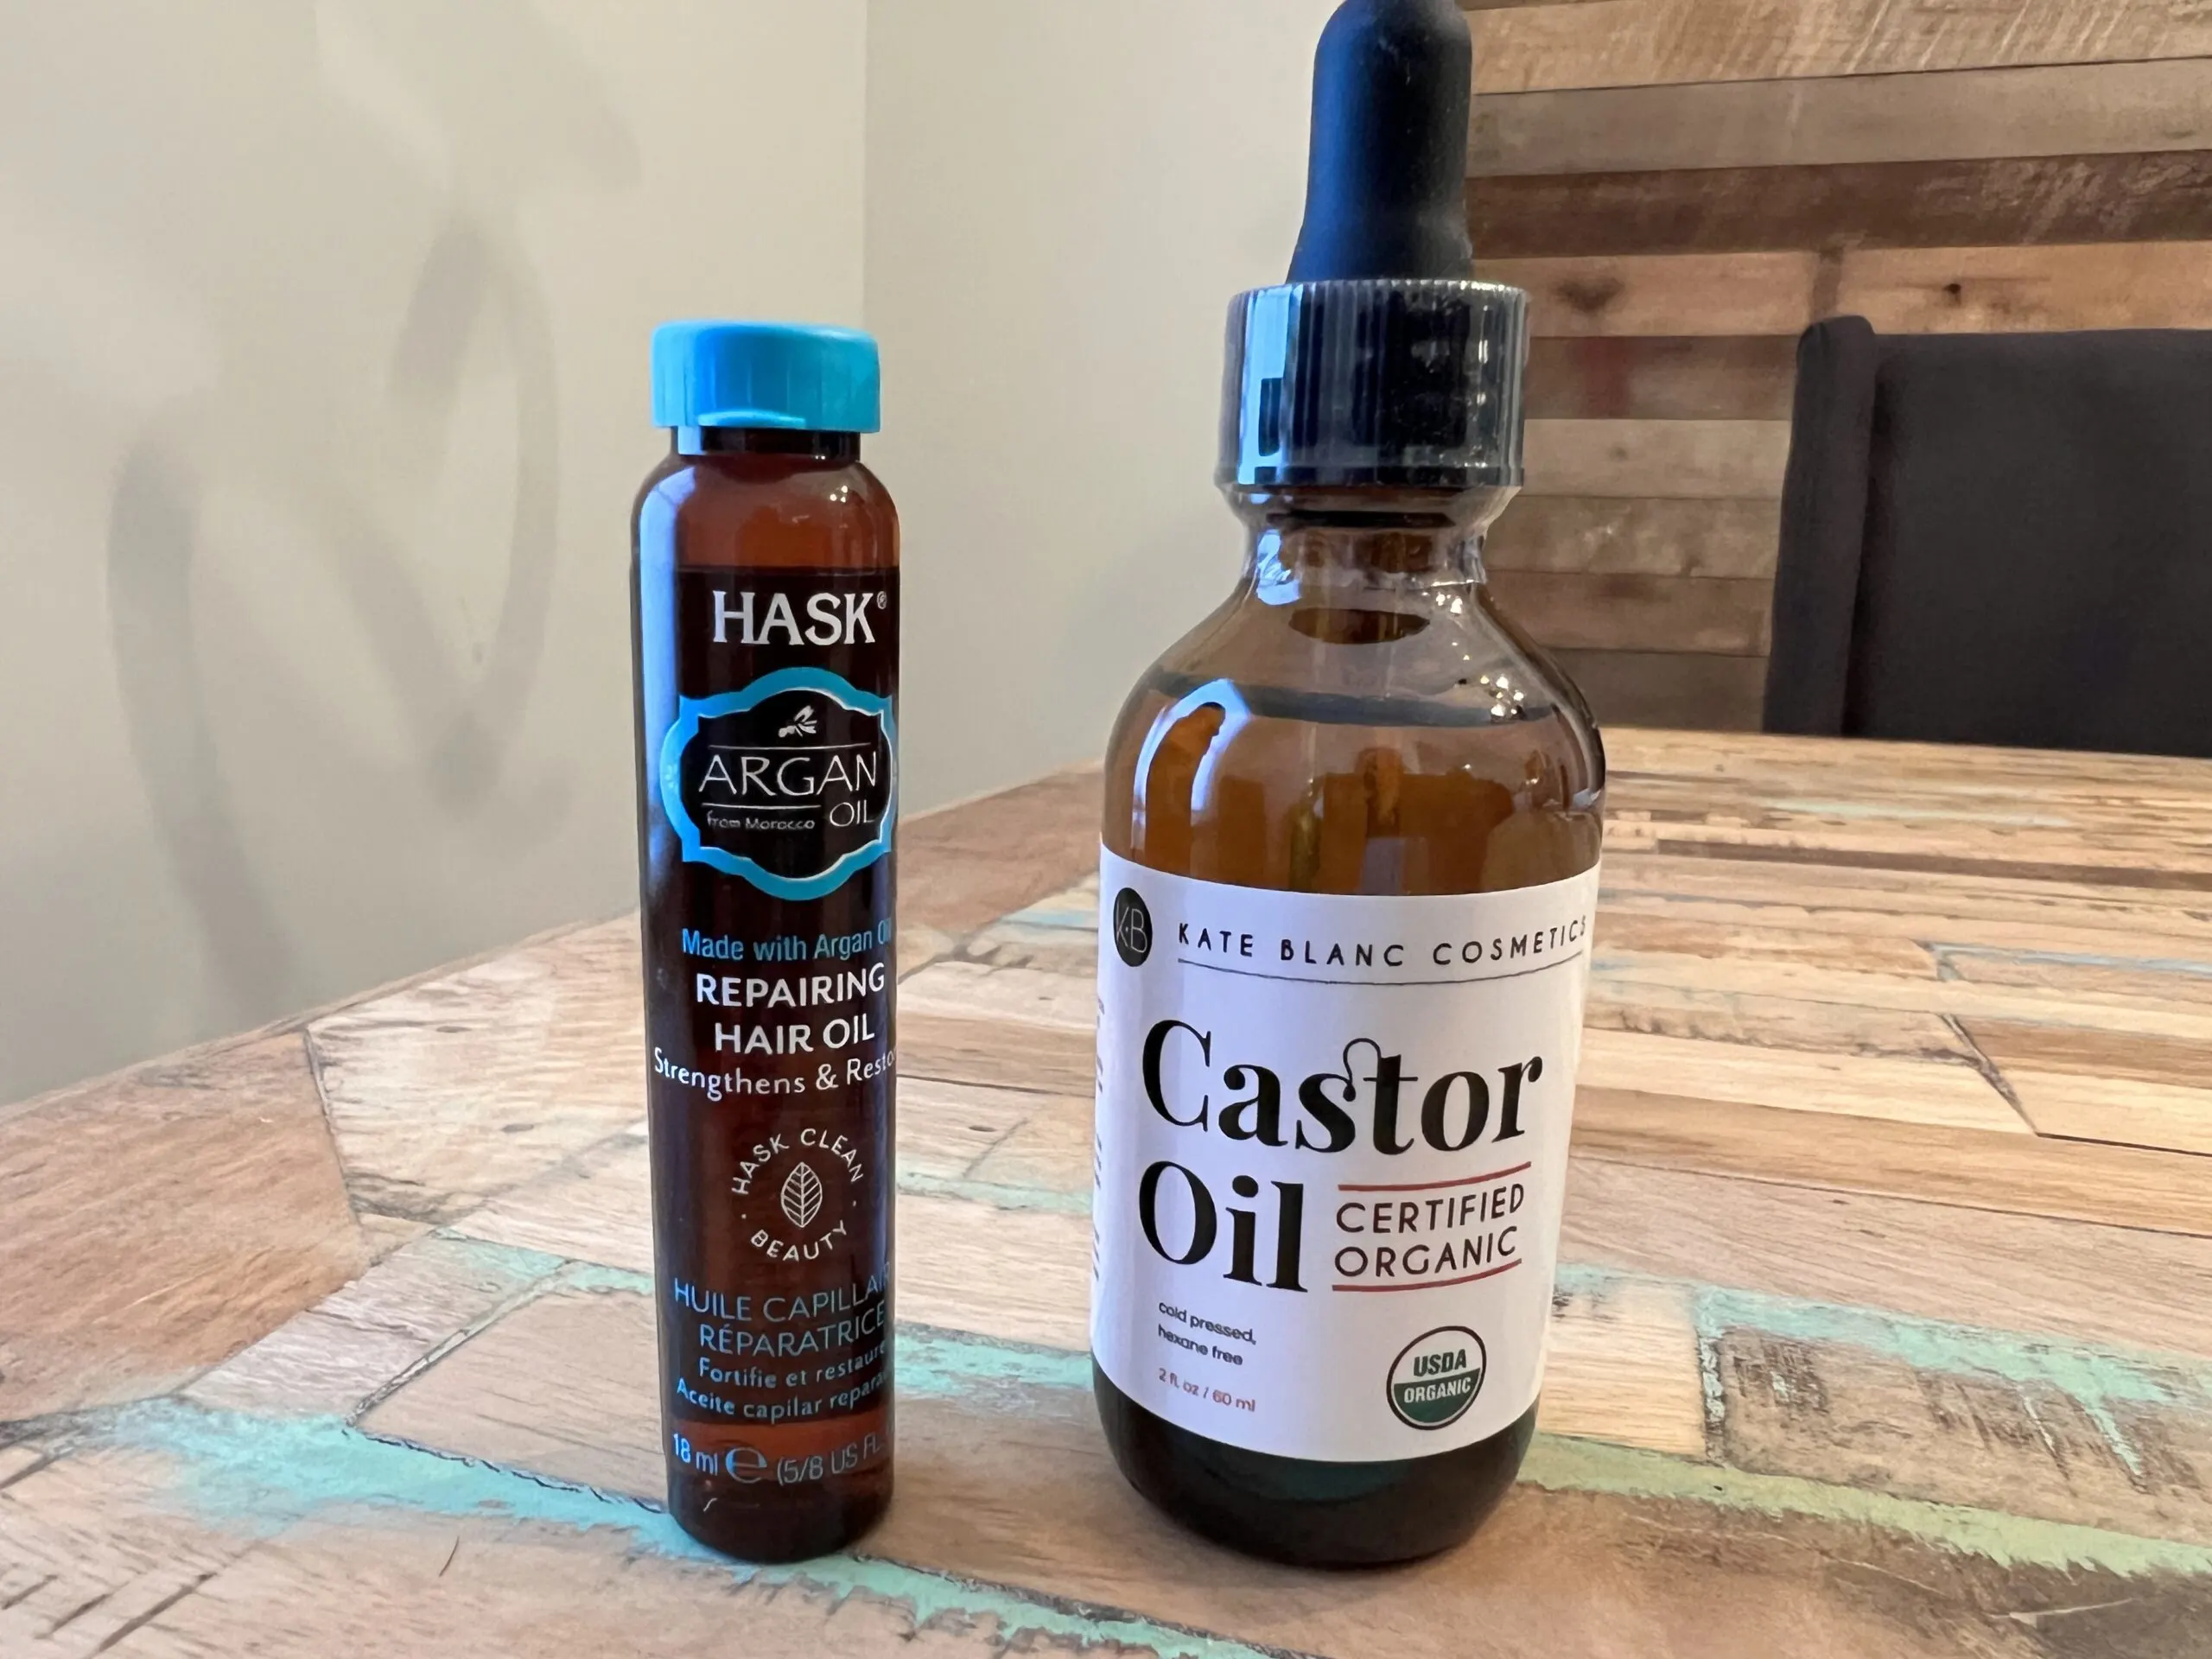 Comparing castor oil vs. argan oil for hair care purposes